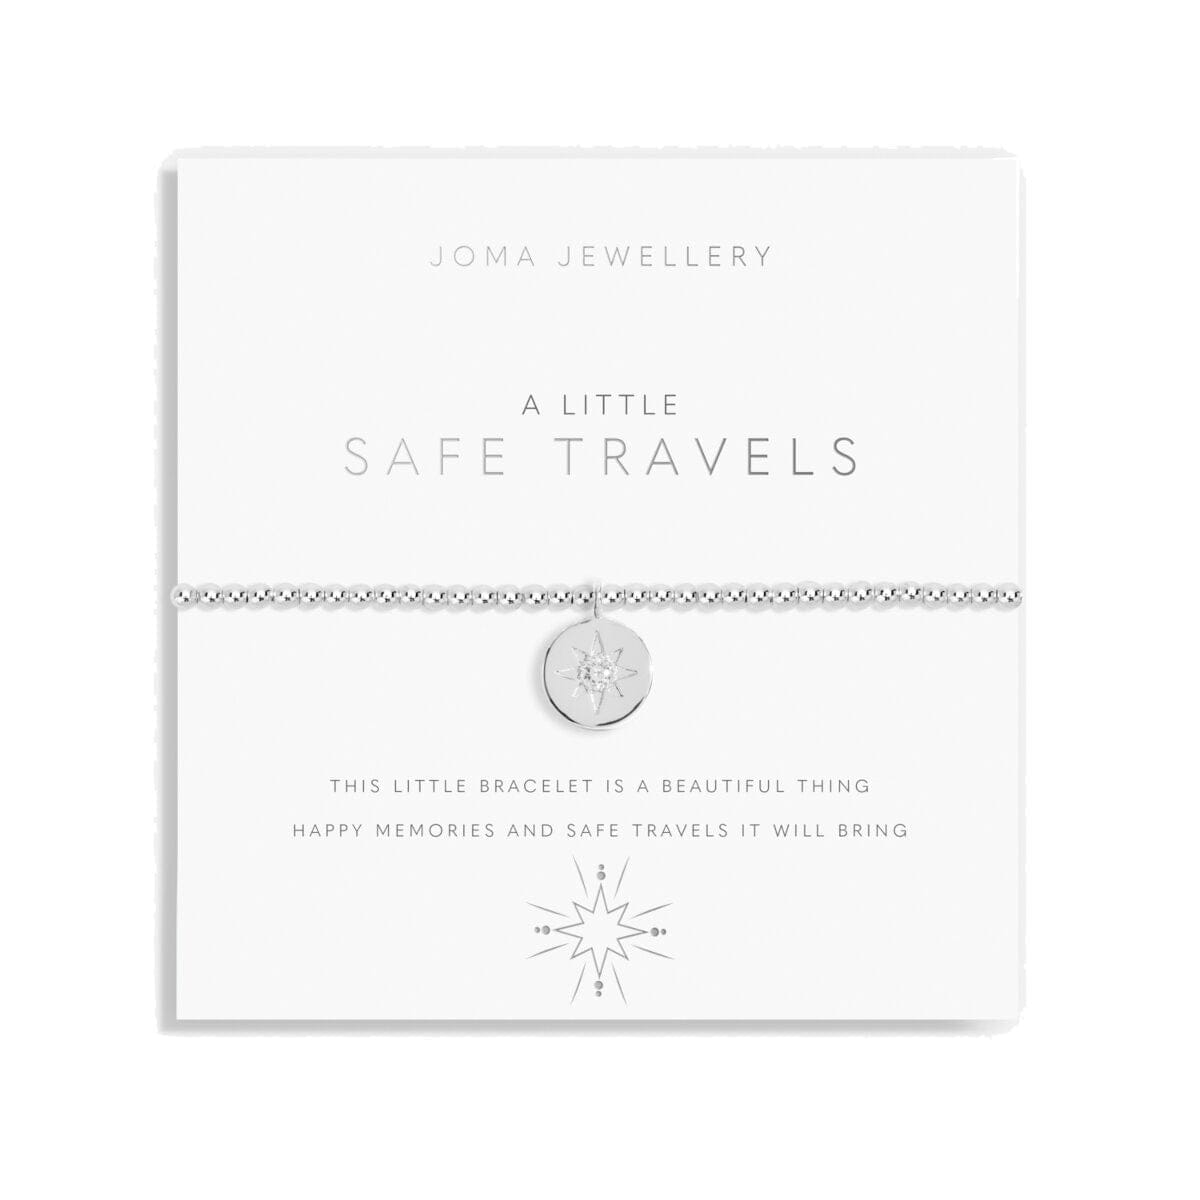 Joma Jewellery Bracelet Joma Jewellery Bracelet - A Little Safe Travels